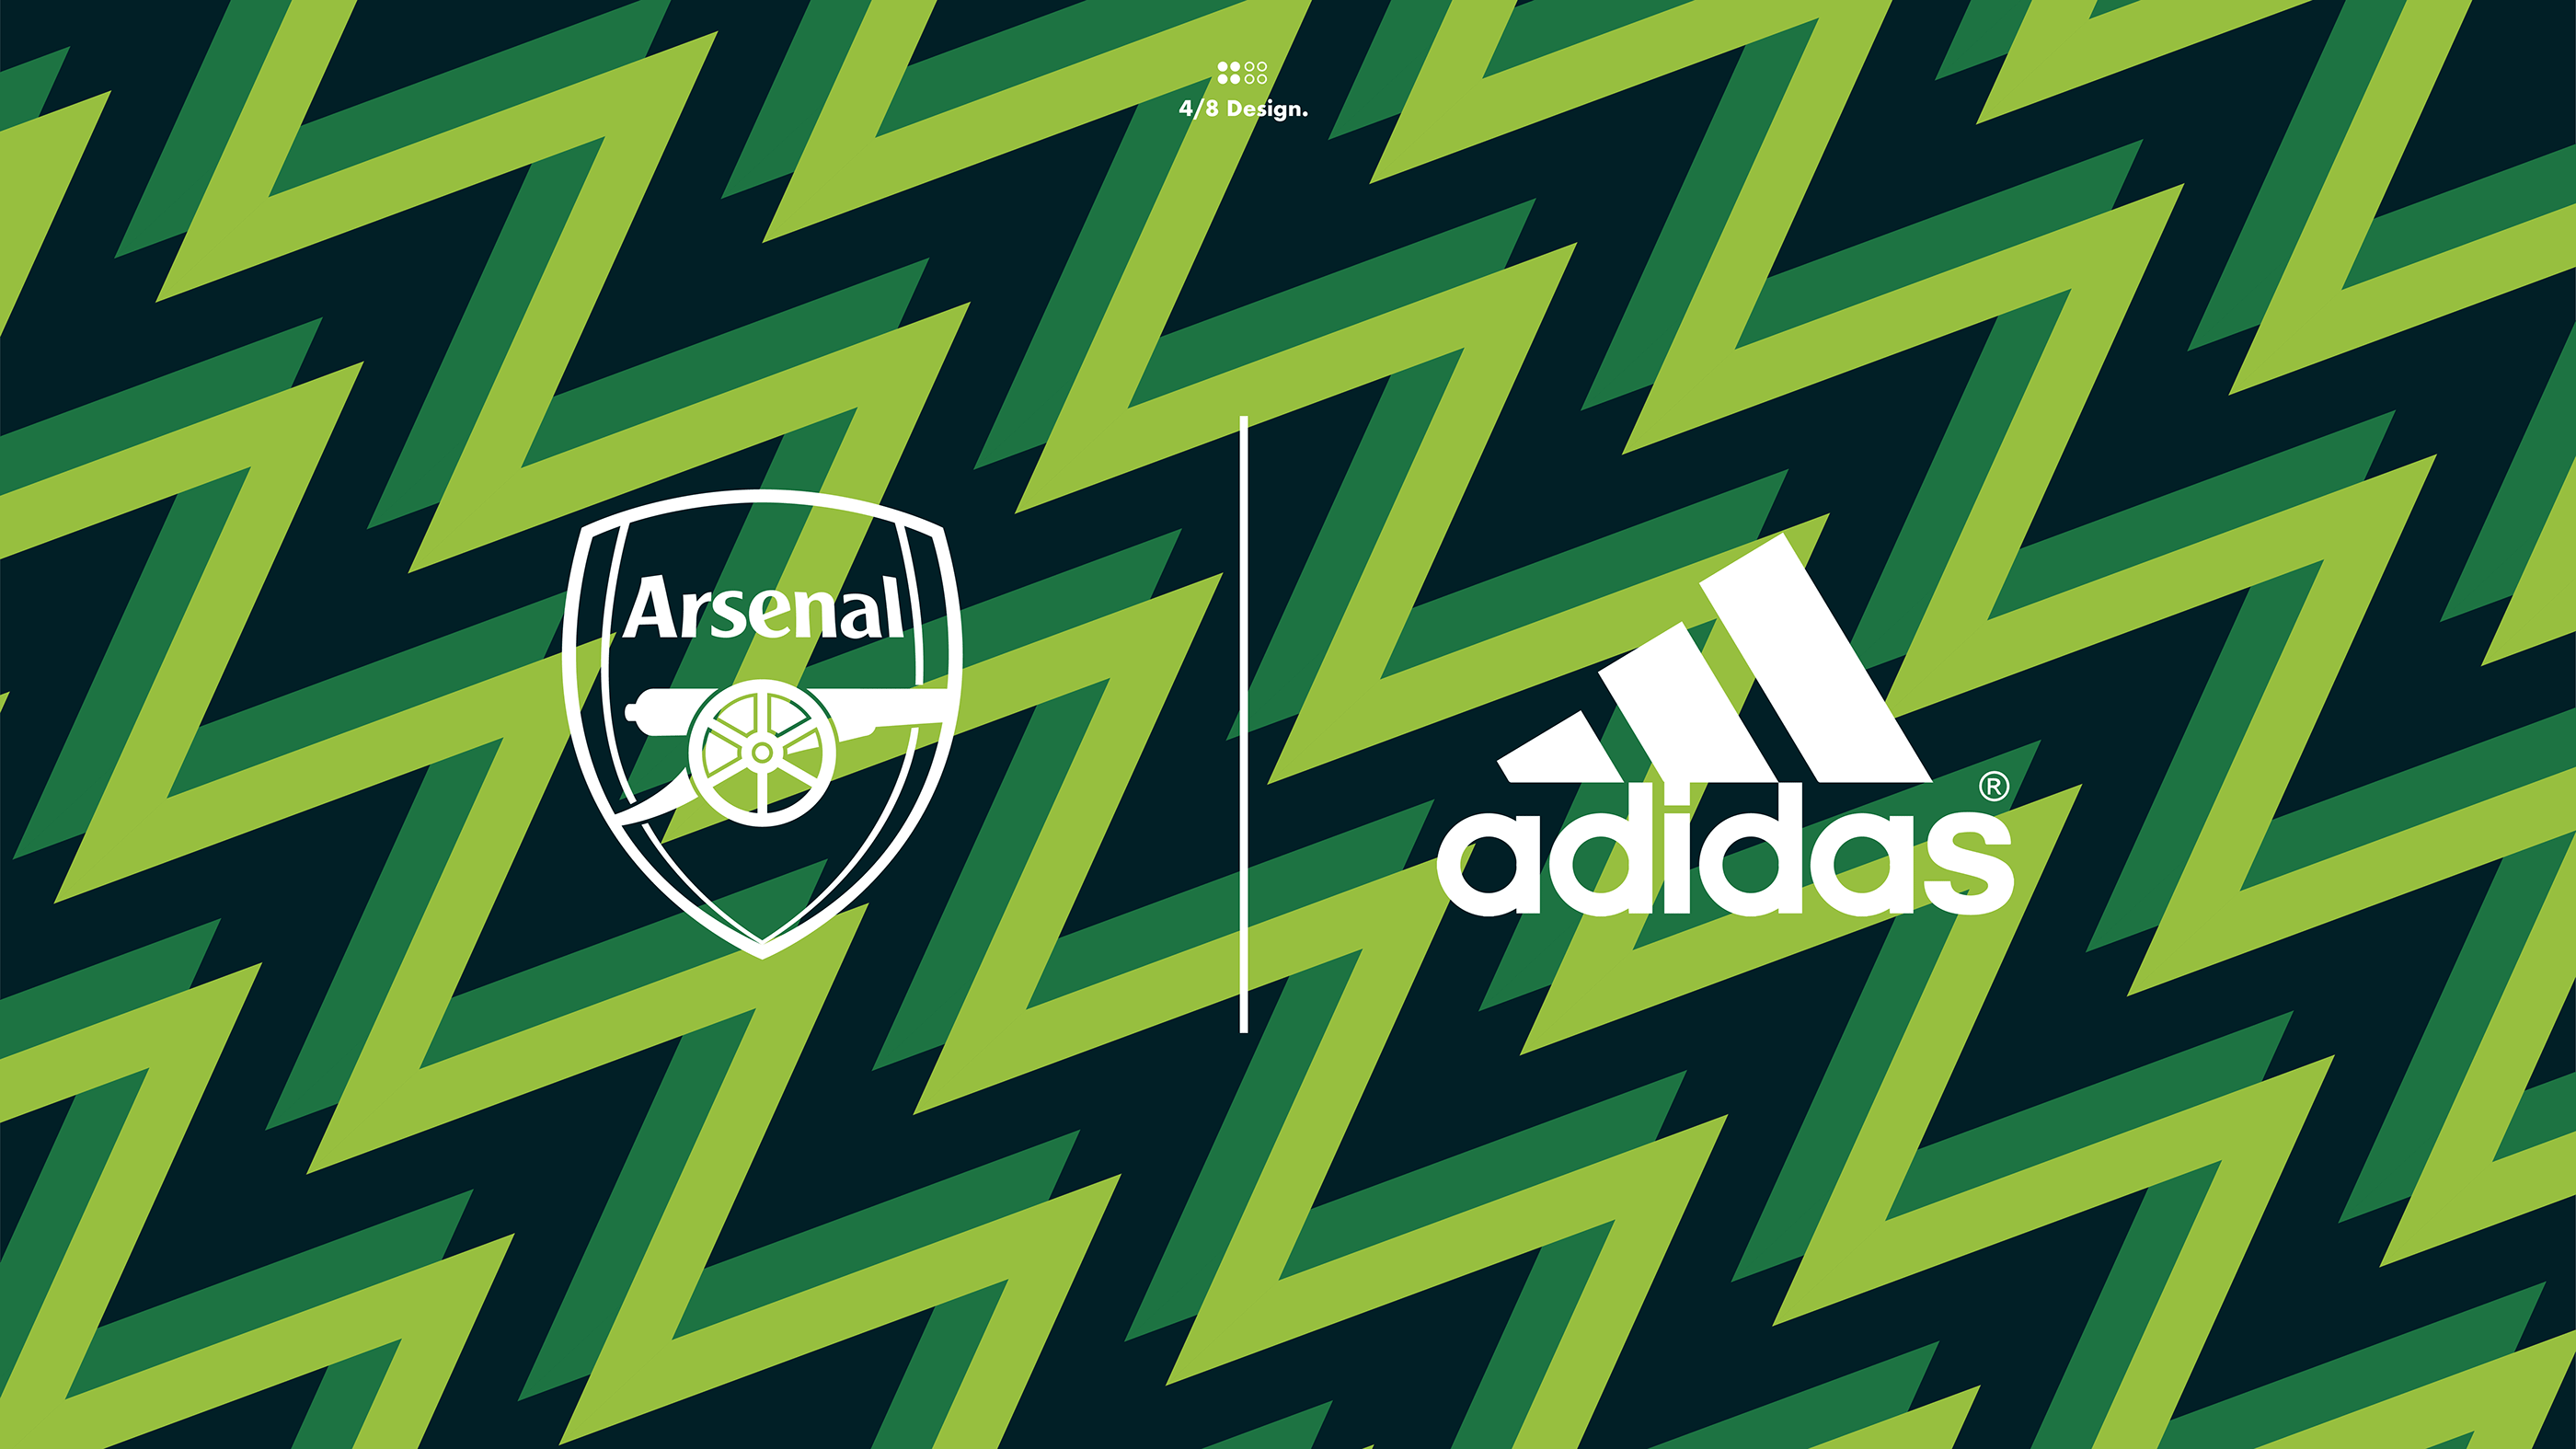 Arsenal Adidas Wallpapers - Wallpaper Cave